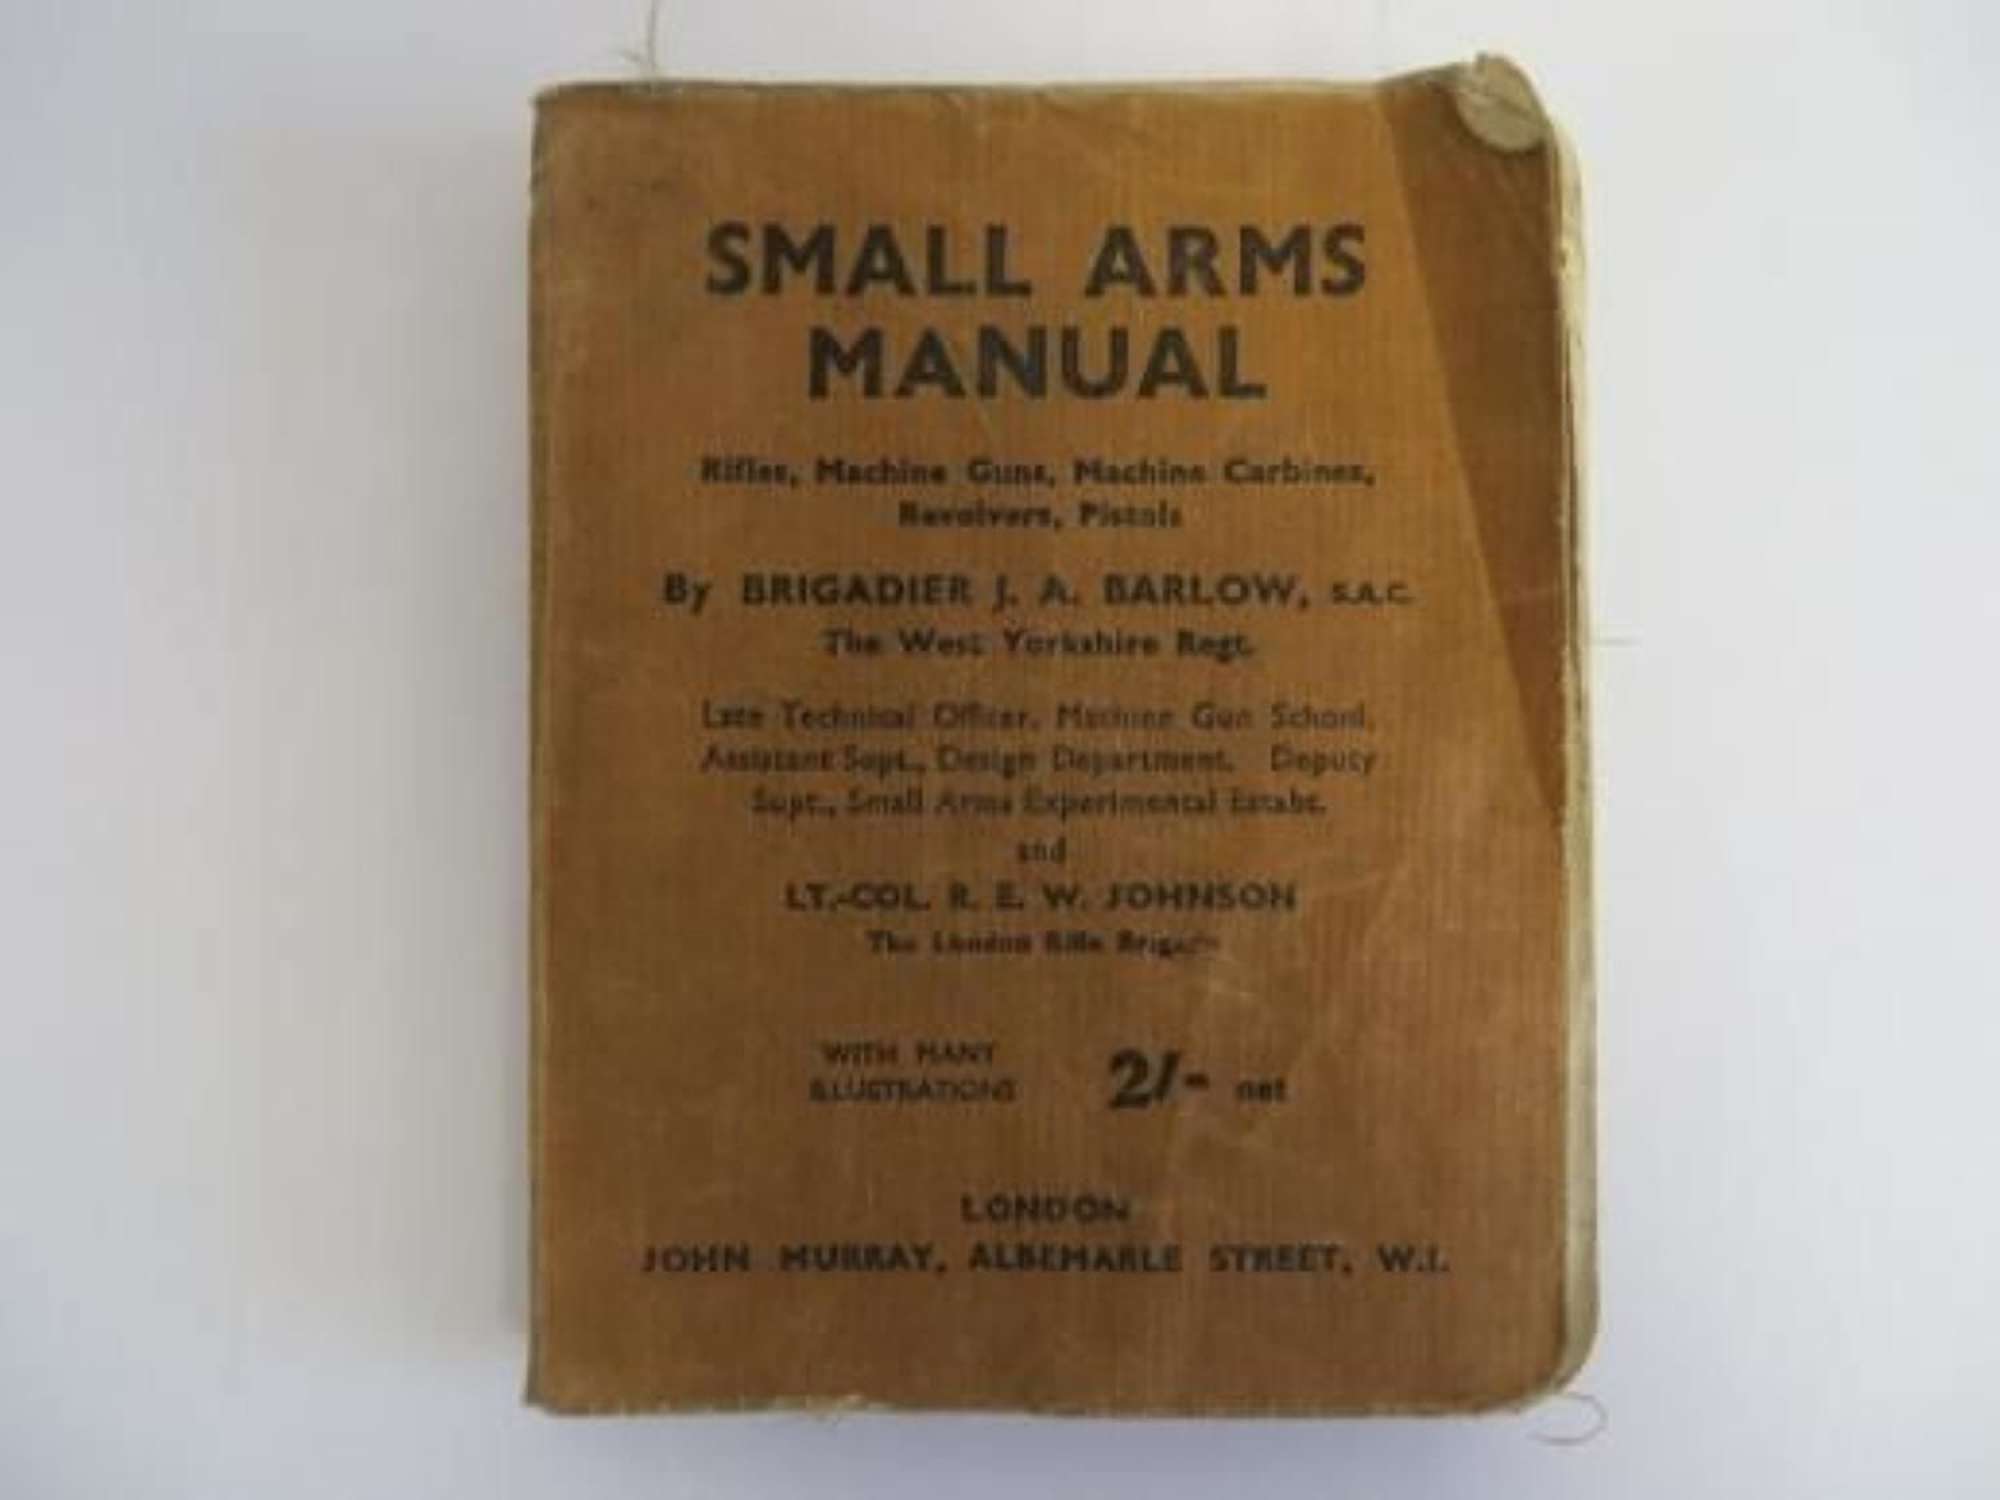 WW2 Small Arms Manual